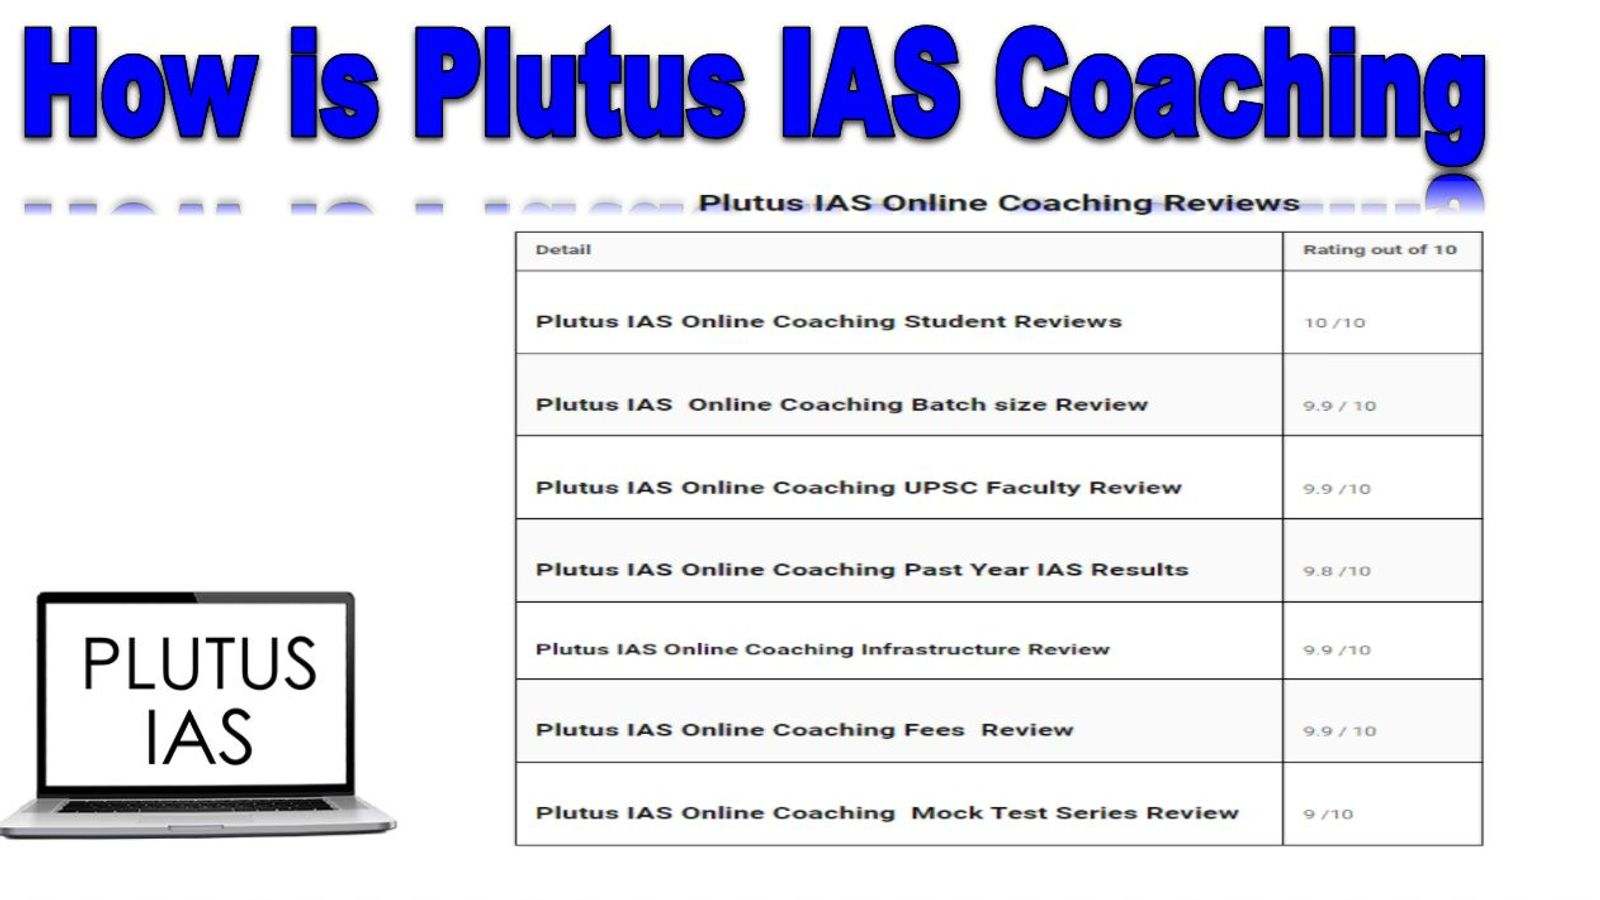 Review of Plutus IAS Online Coaching